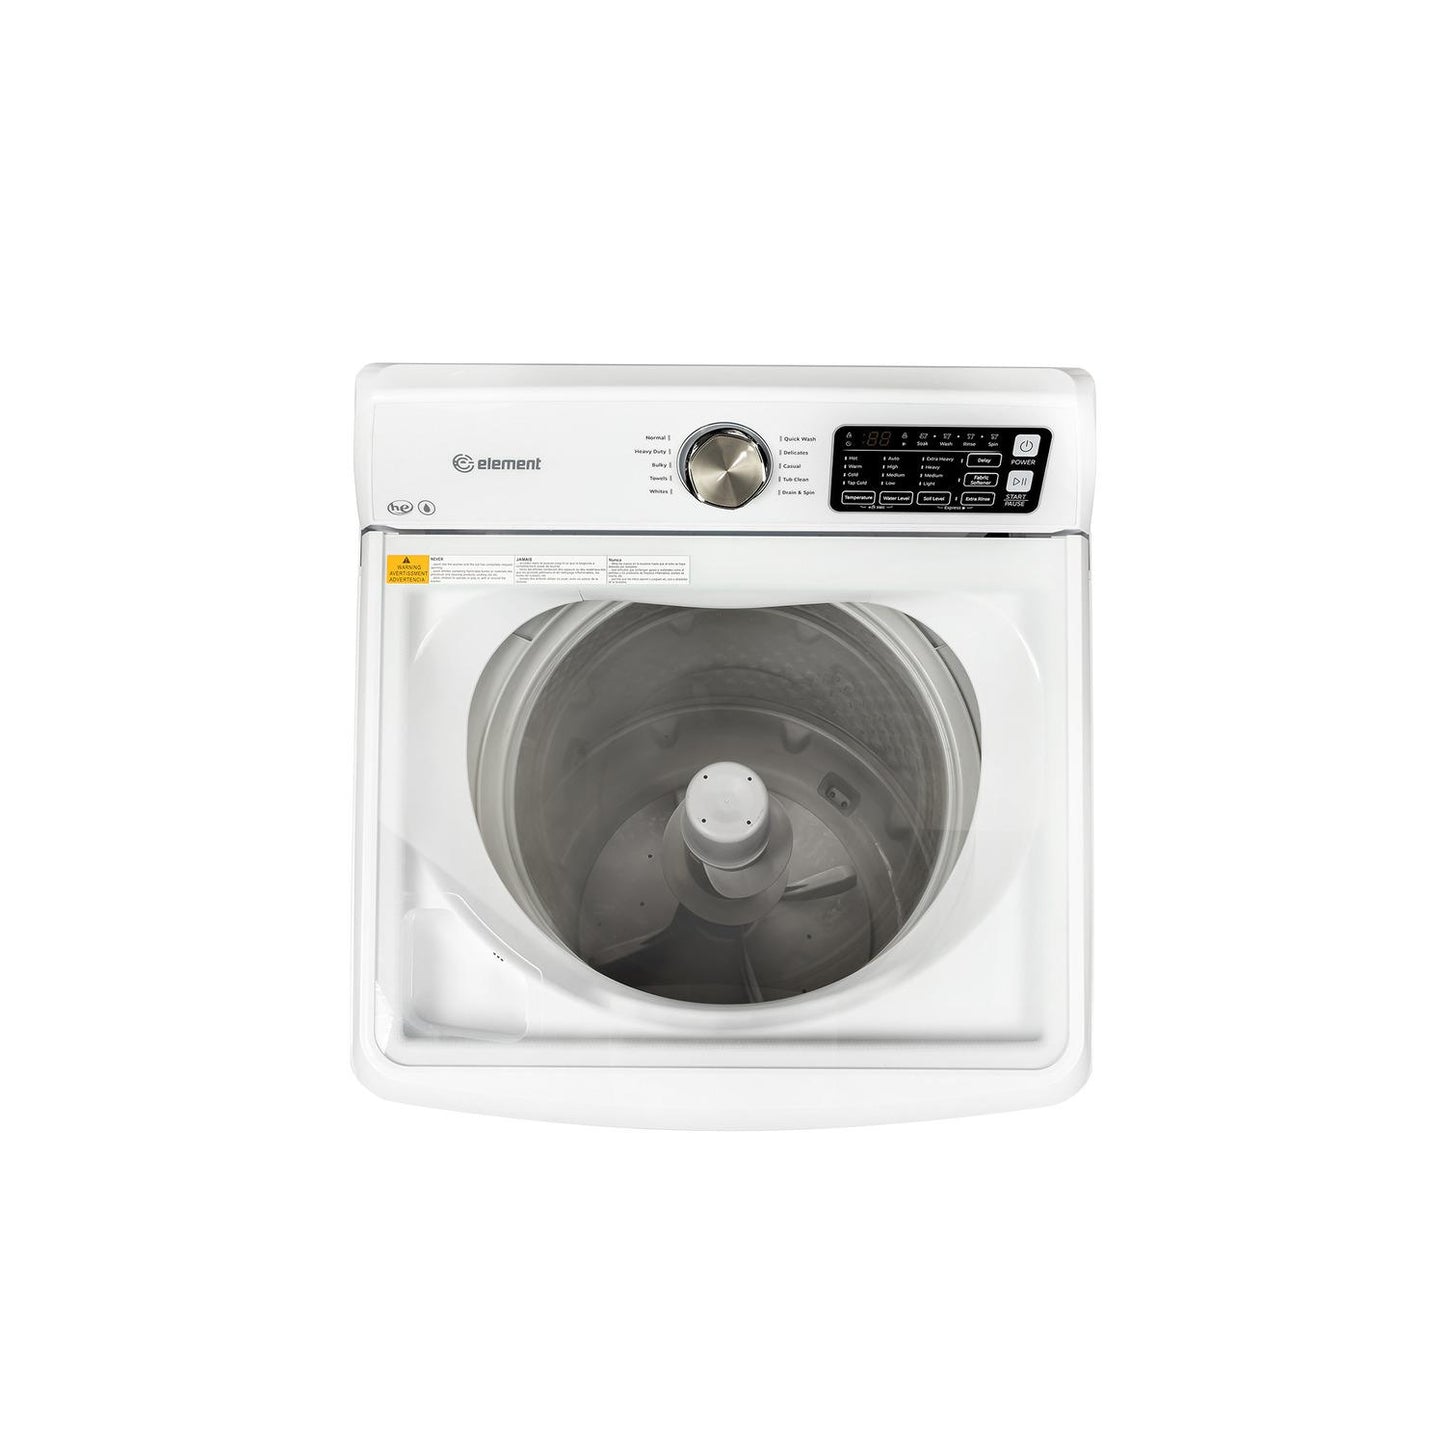 Element Appliance ETW4125CW Element Electronics 4.1 Cu. Ft. 25.8Inch Top Load Washing Machine - White (Etw4125Cw)